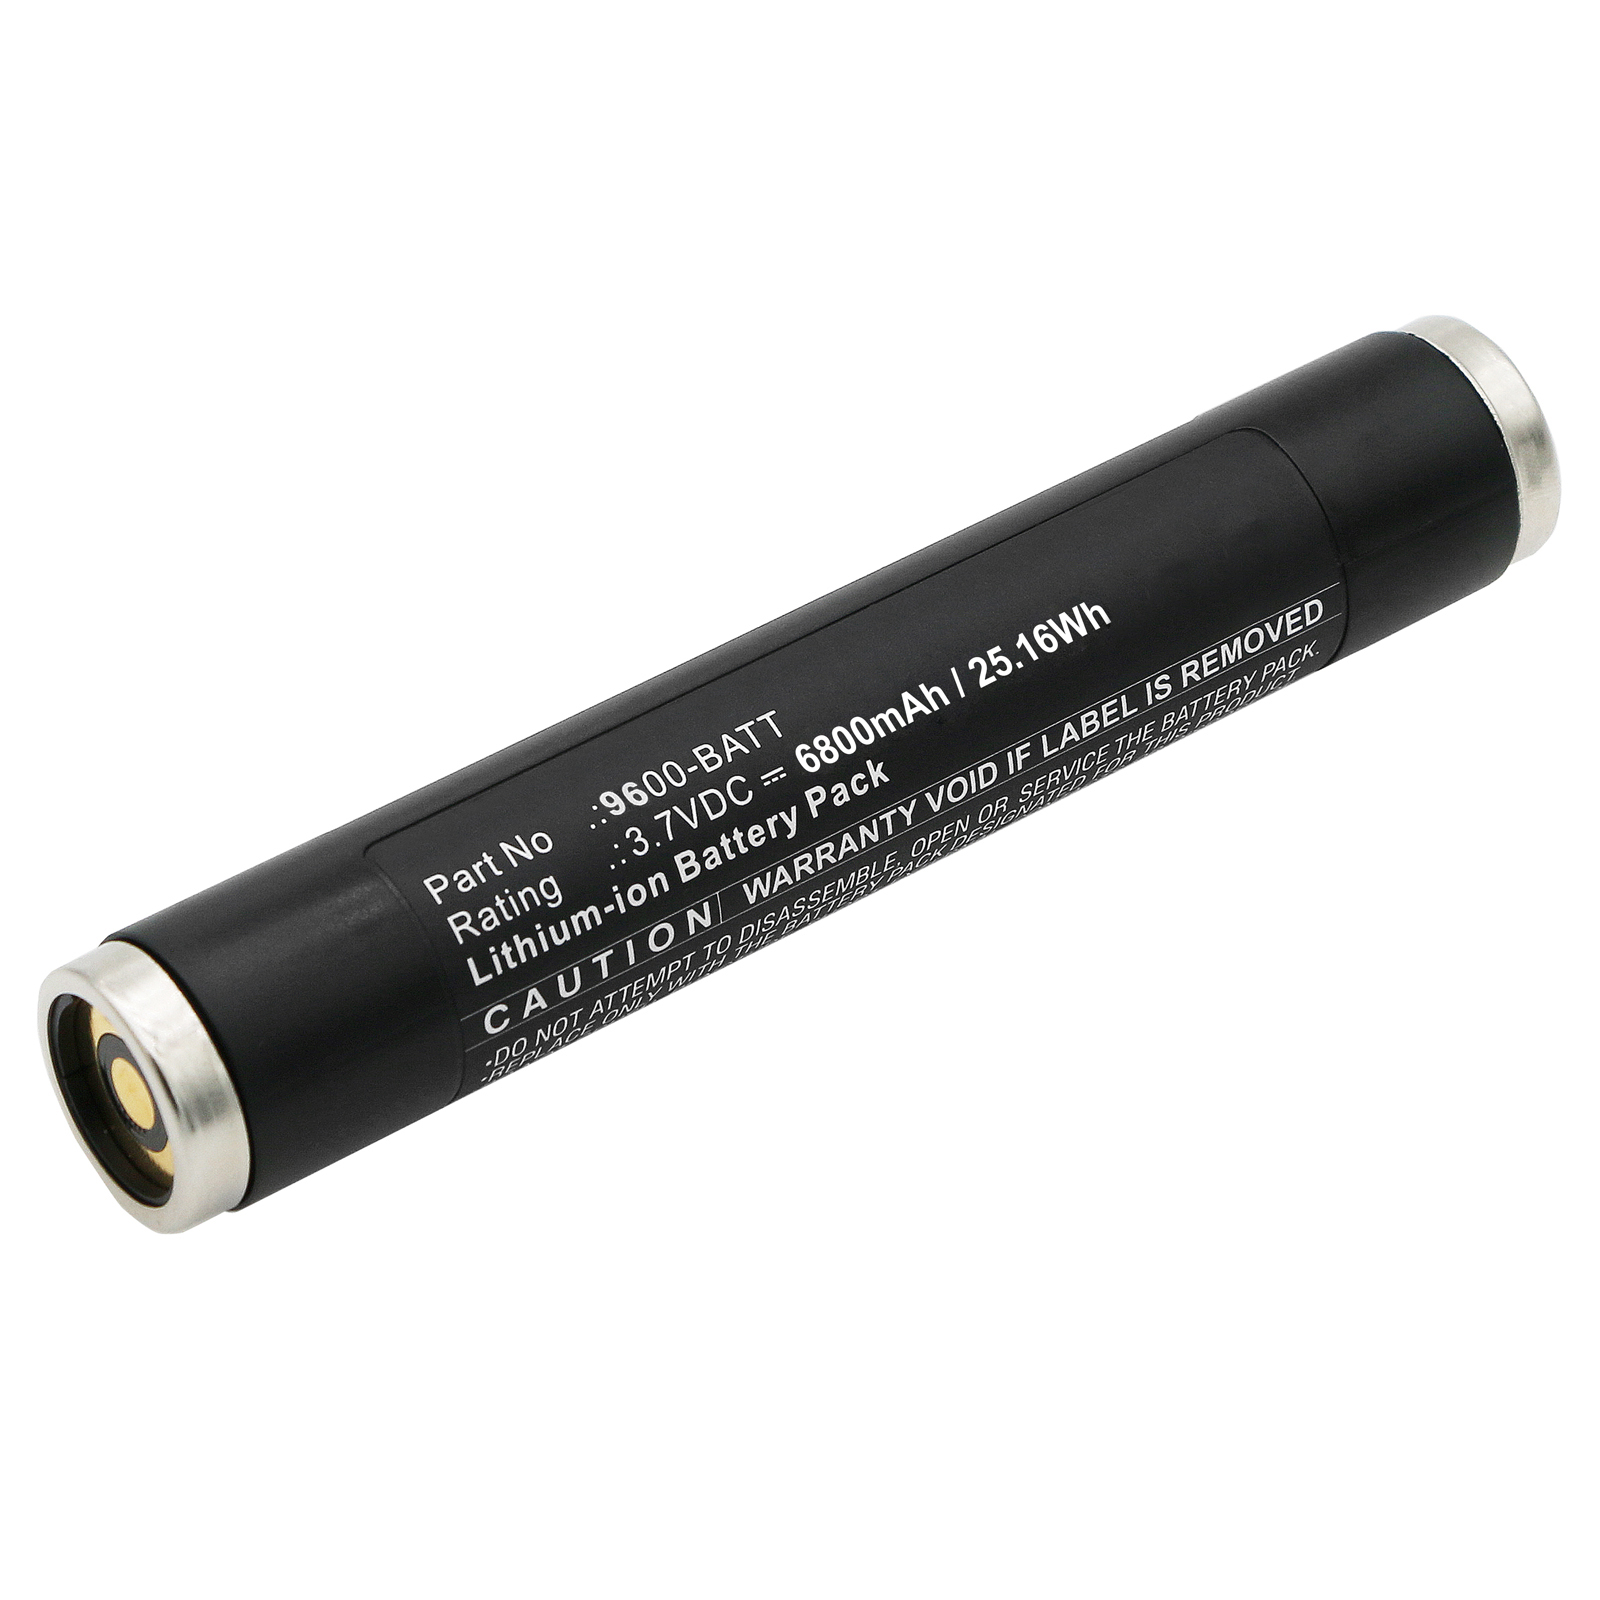 Batteries for NightstickFlashlight